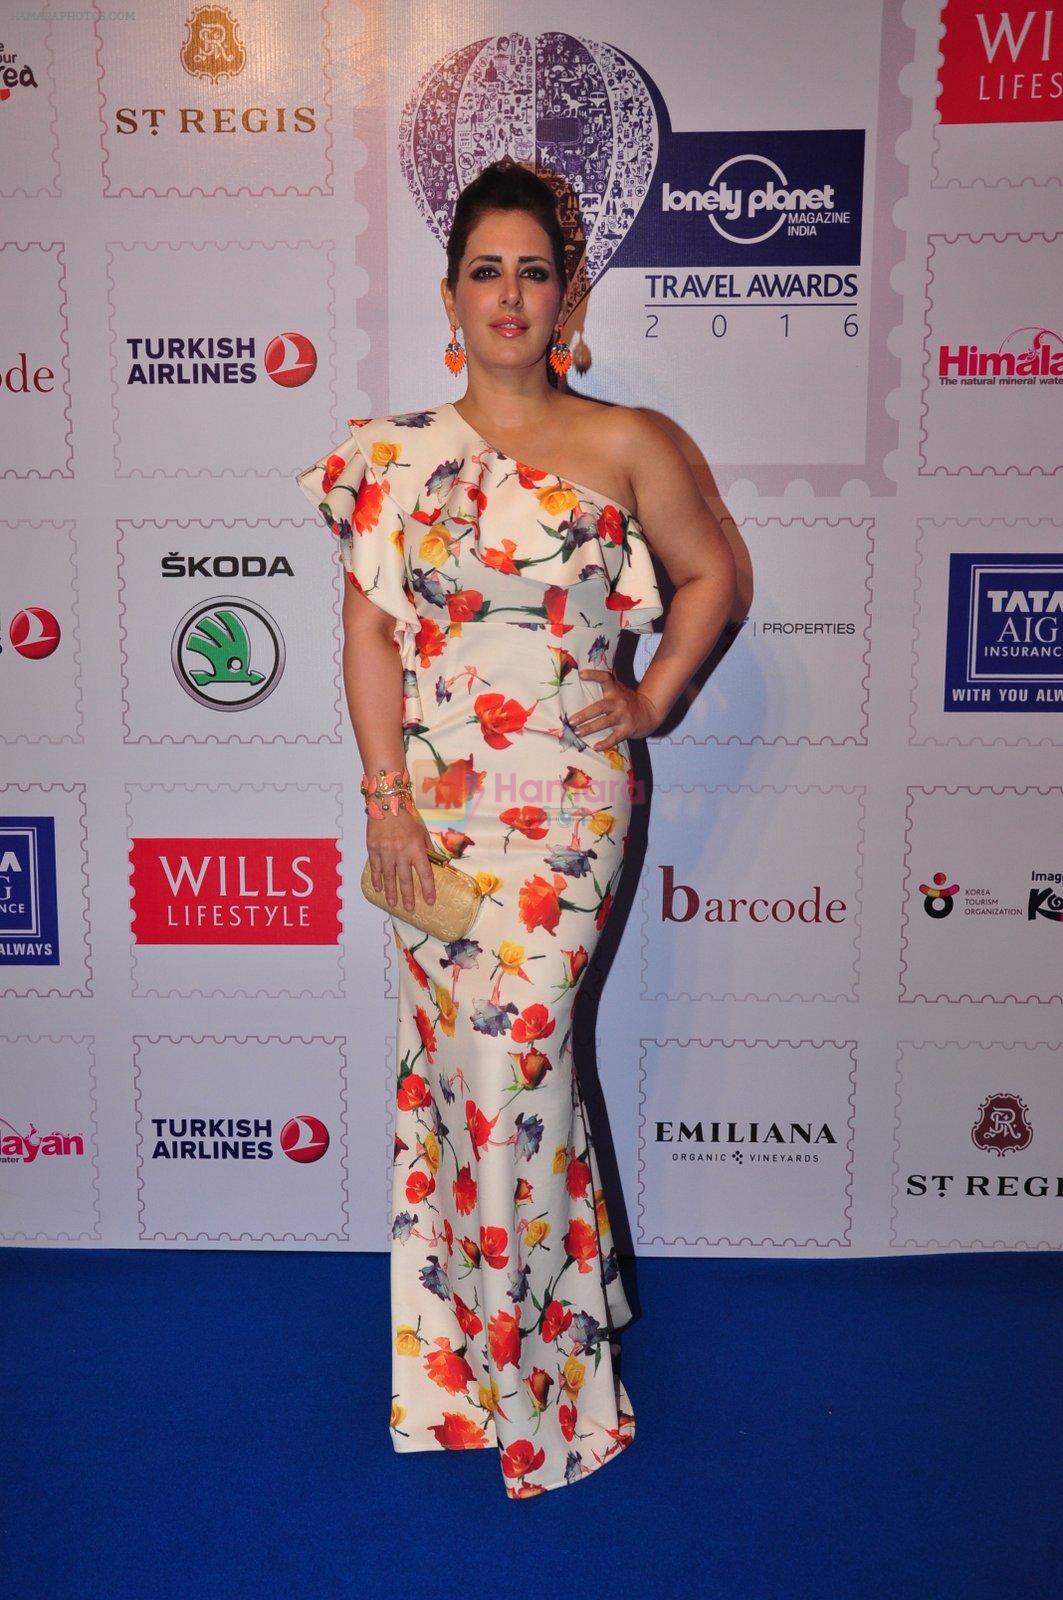 Pria Kataria Puri at Lonely Planet Awards in Mumbai on 9th May 2016